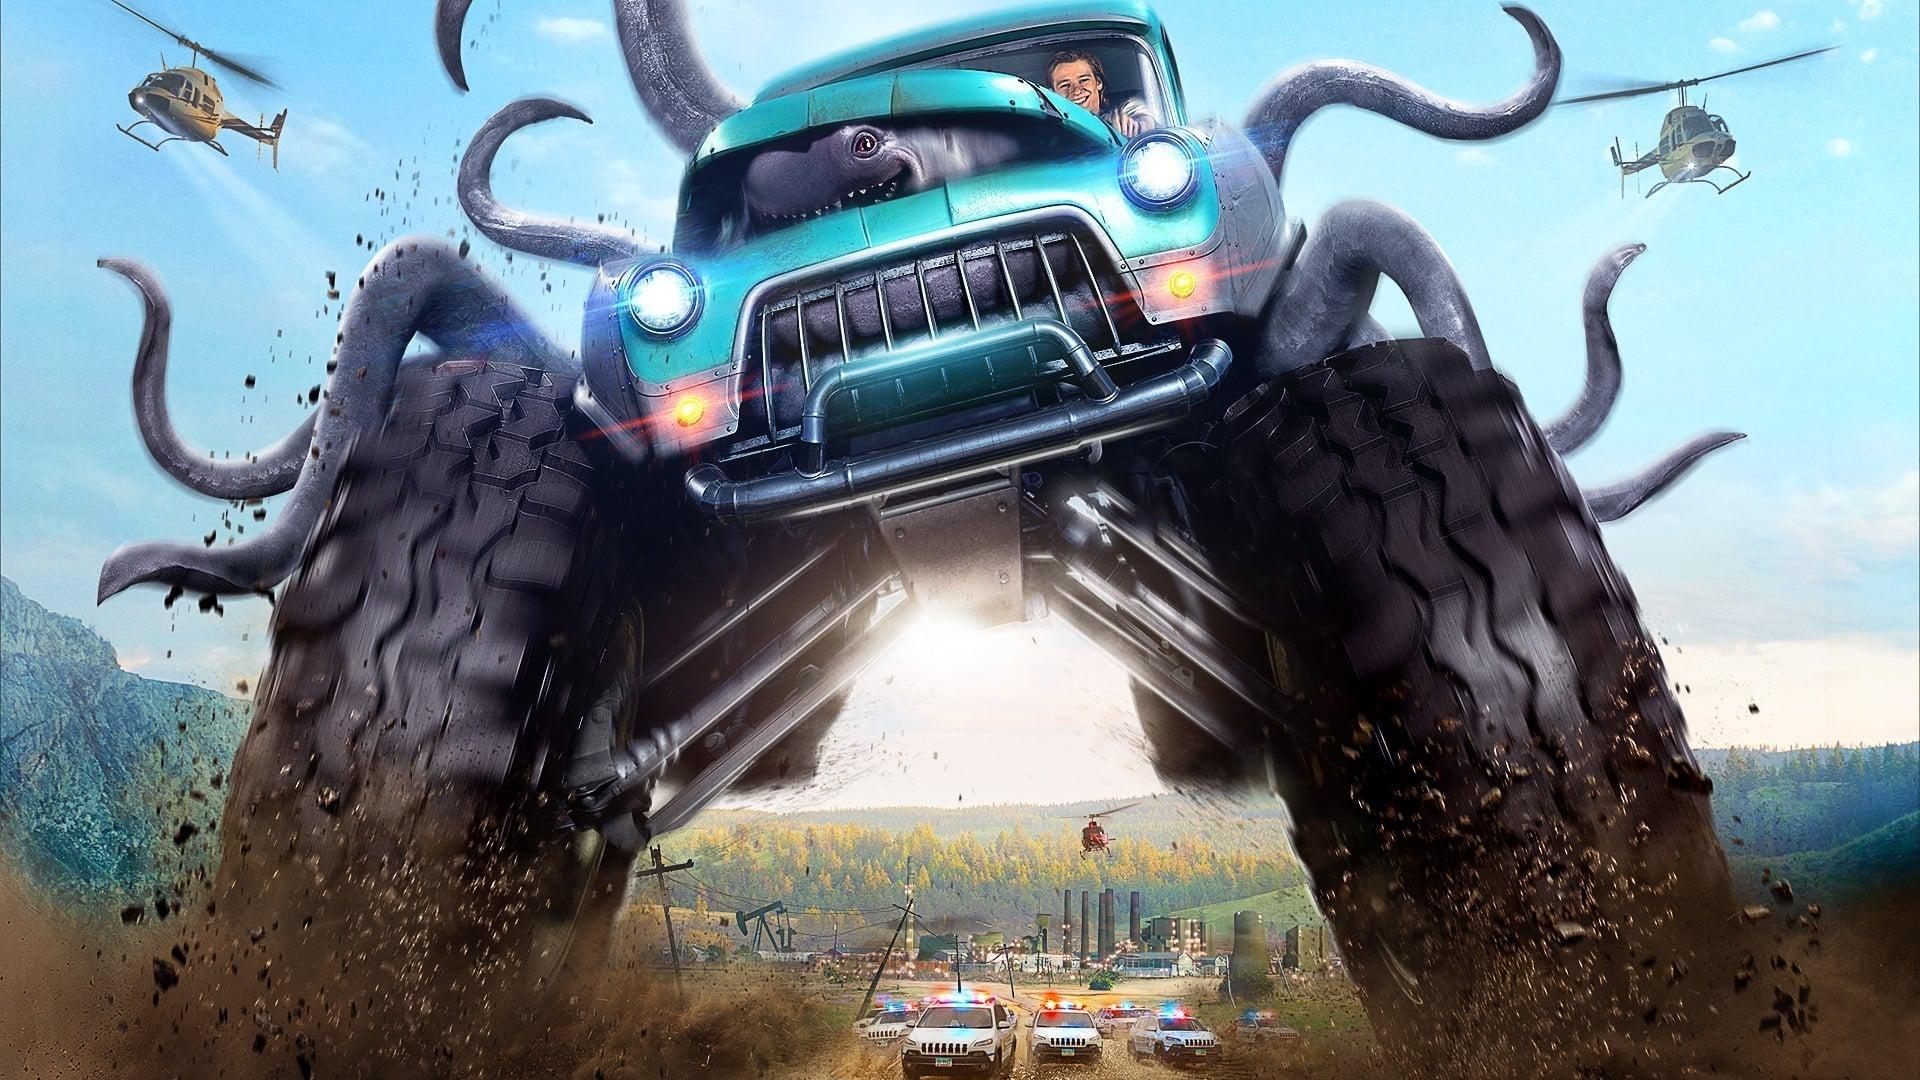 دانلود فیلم Monster Trucks 2016